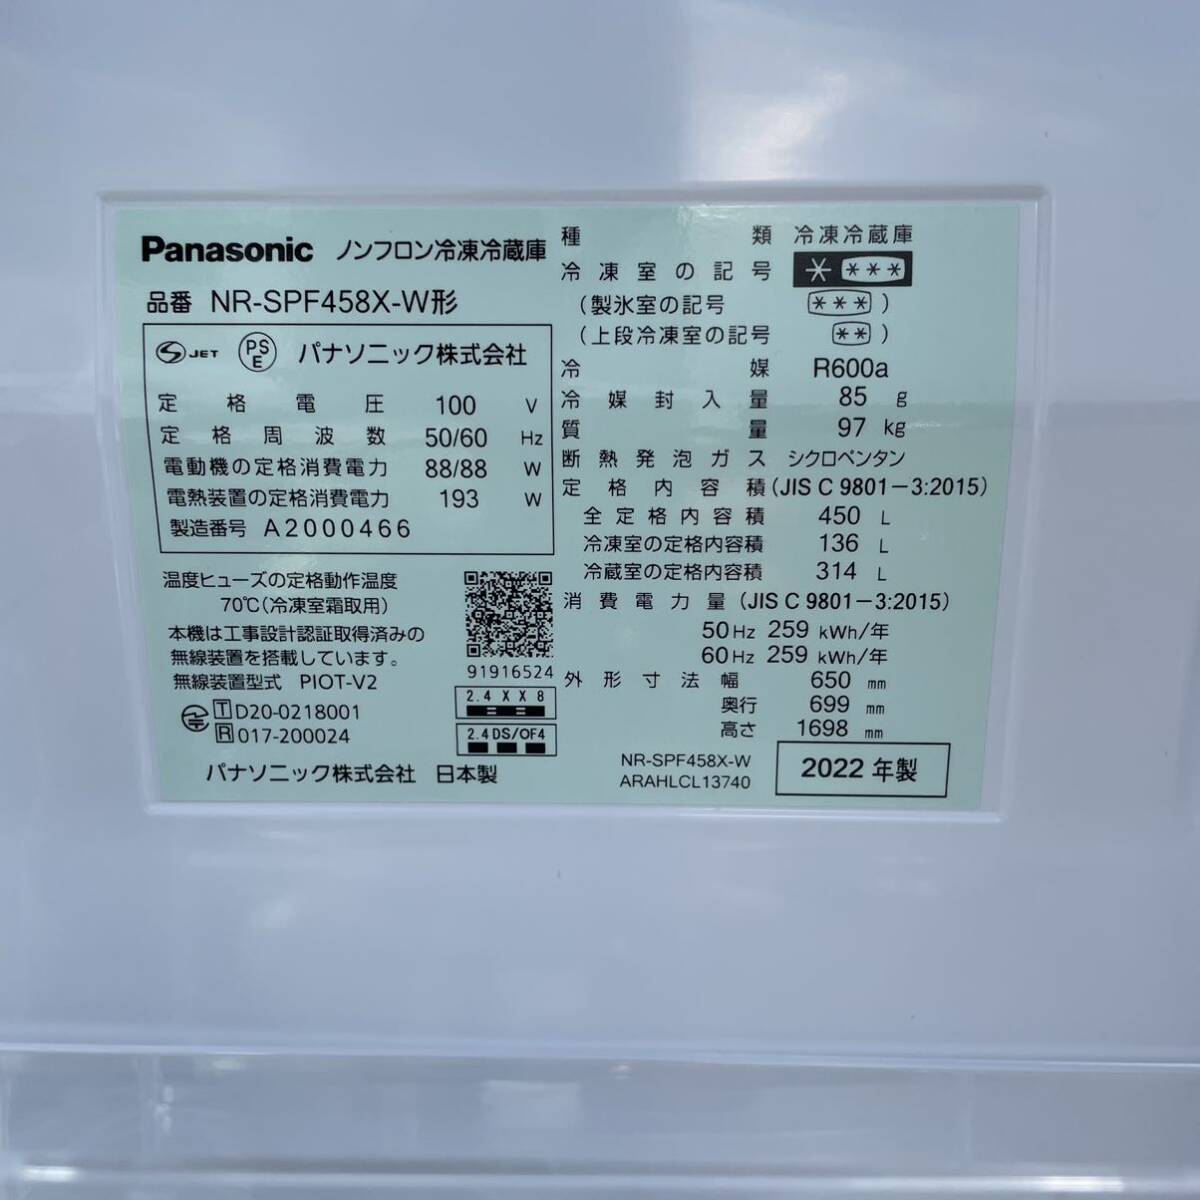 [ secondhand goods ] Panasonic 450L 5do Anon freon freezing refrigerator NR-SPF458X-W 2022 year made Panasonic